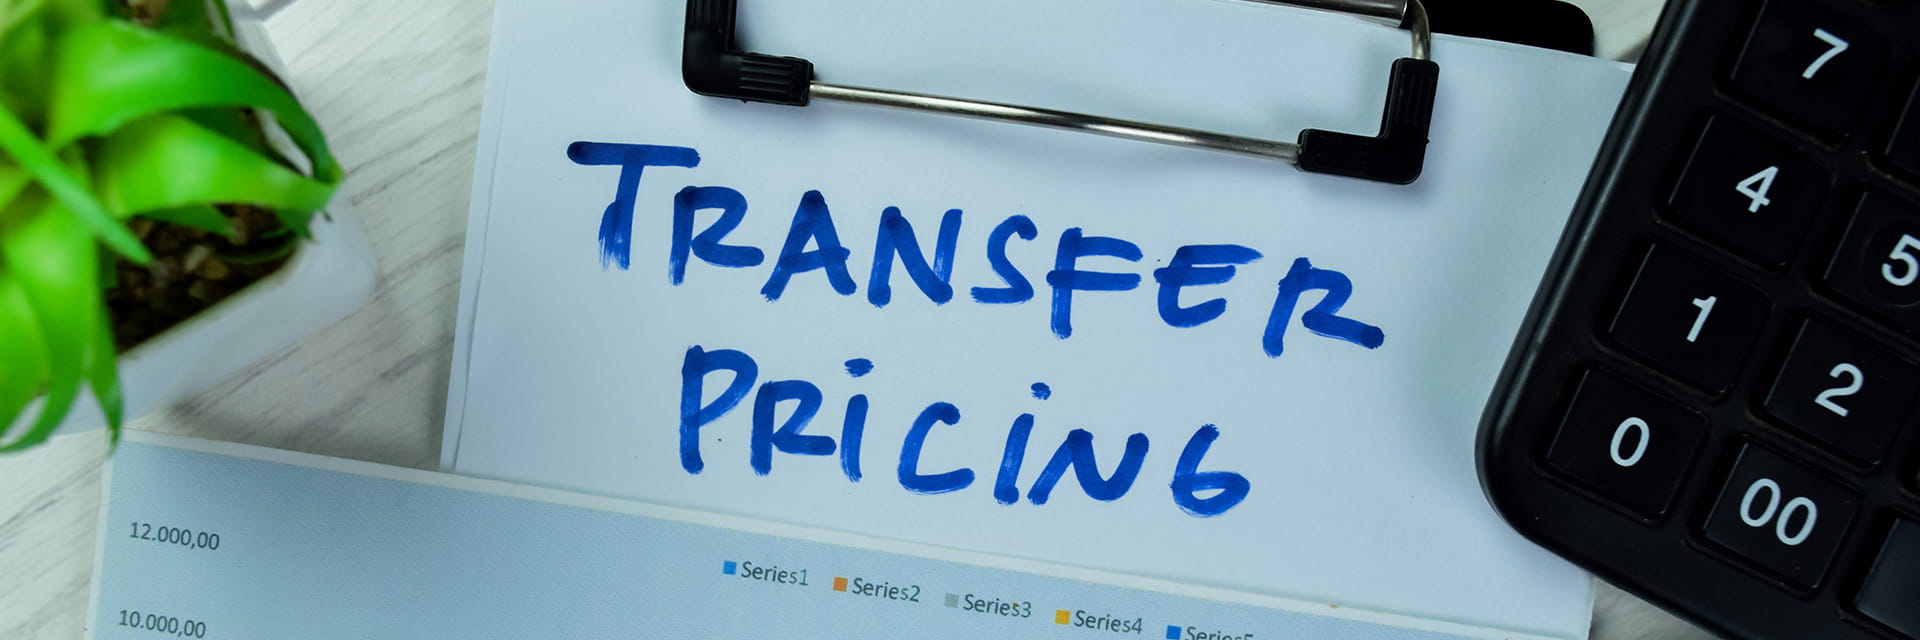 Transaction Manager for Handling Transfer Pricing Challenge